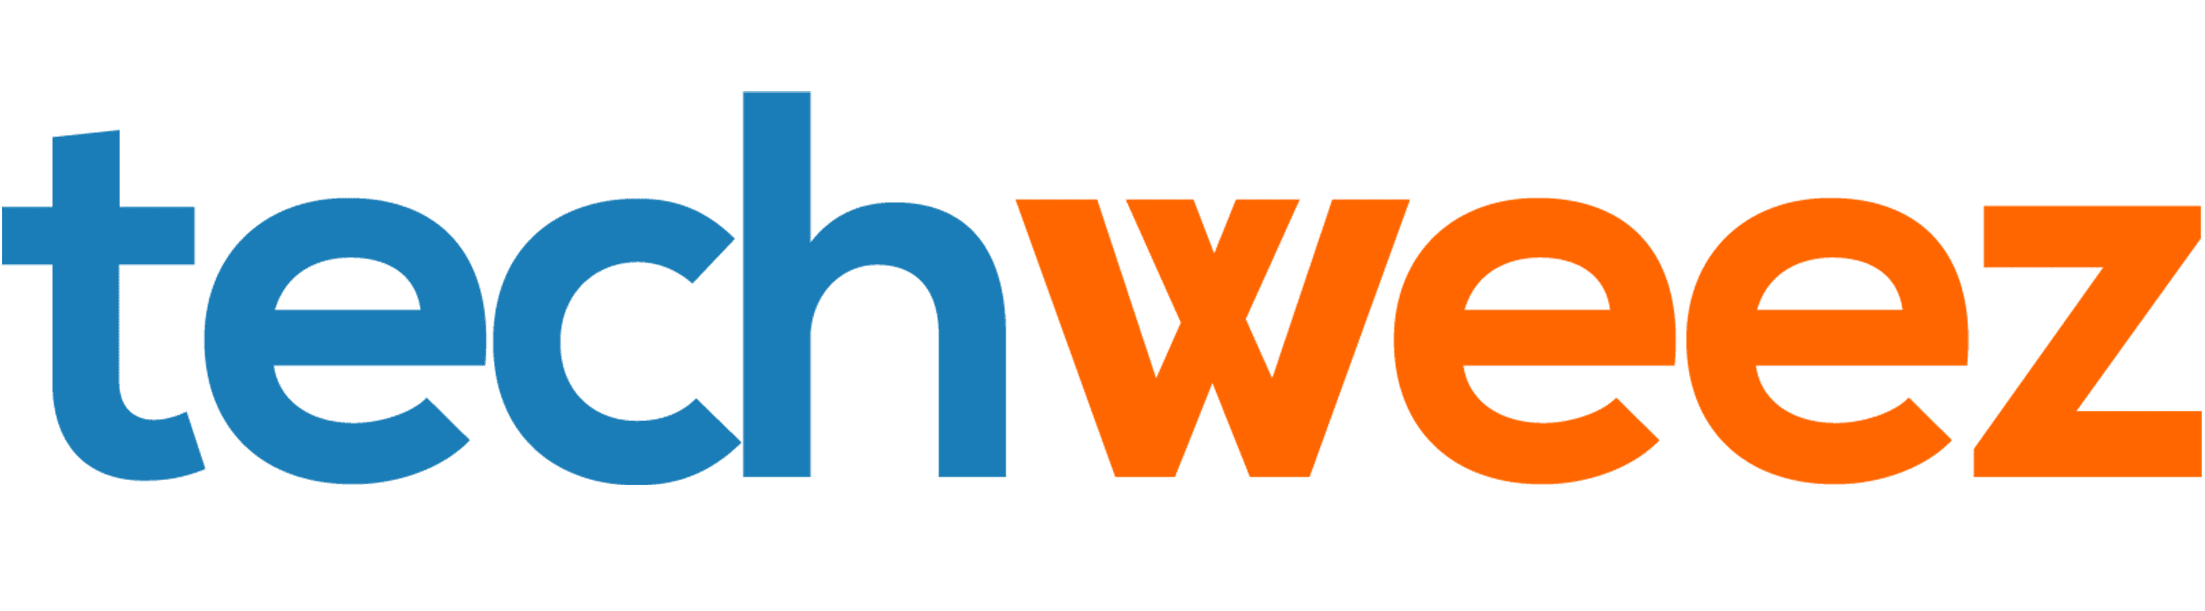 techweez website logo - Techweez